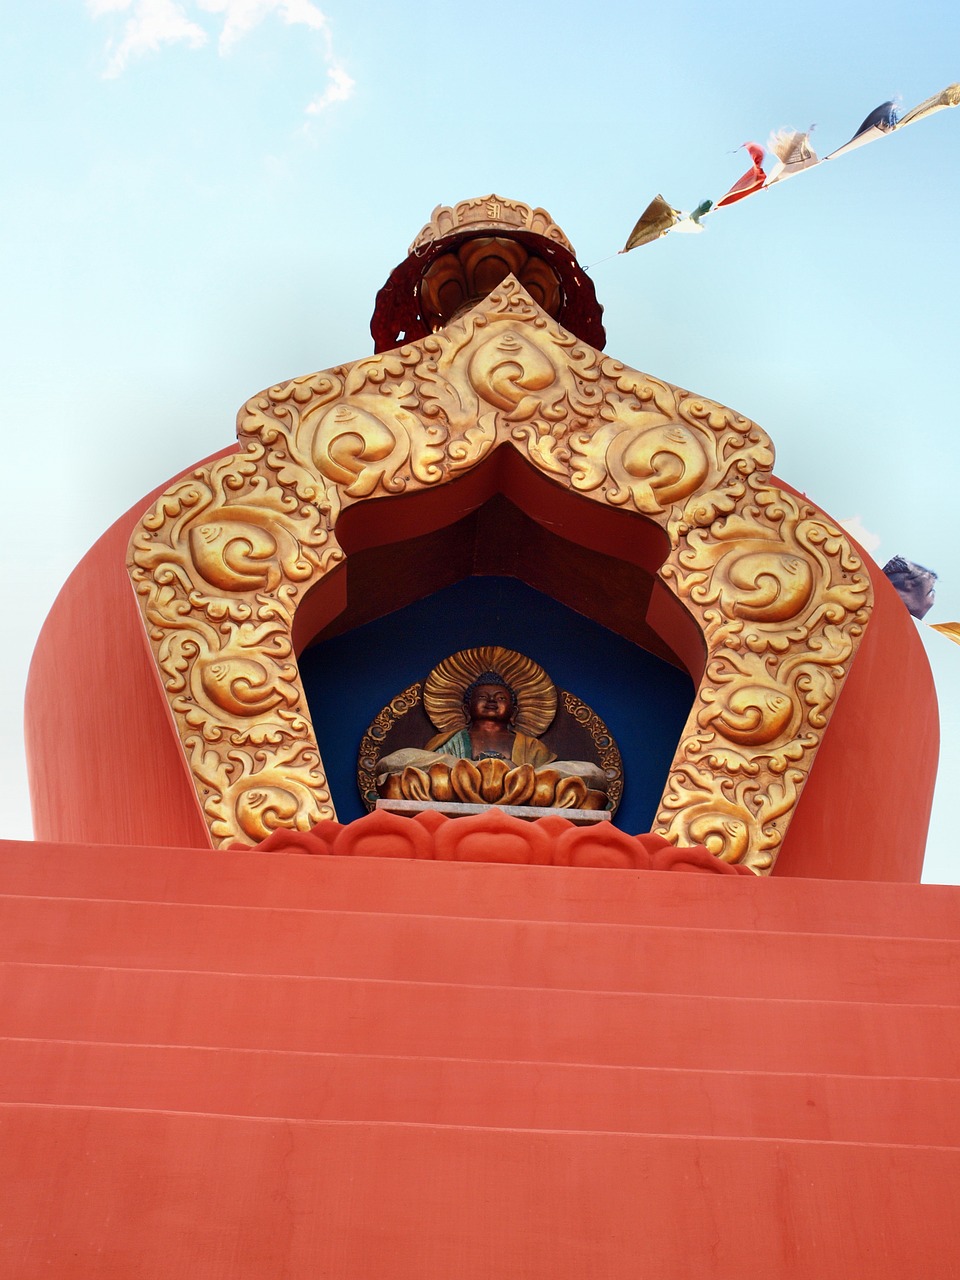 Amitabha Stupa and Peace Park